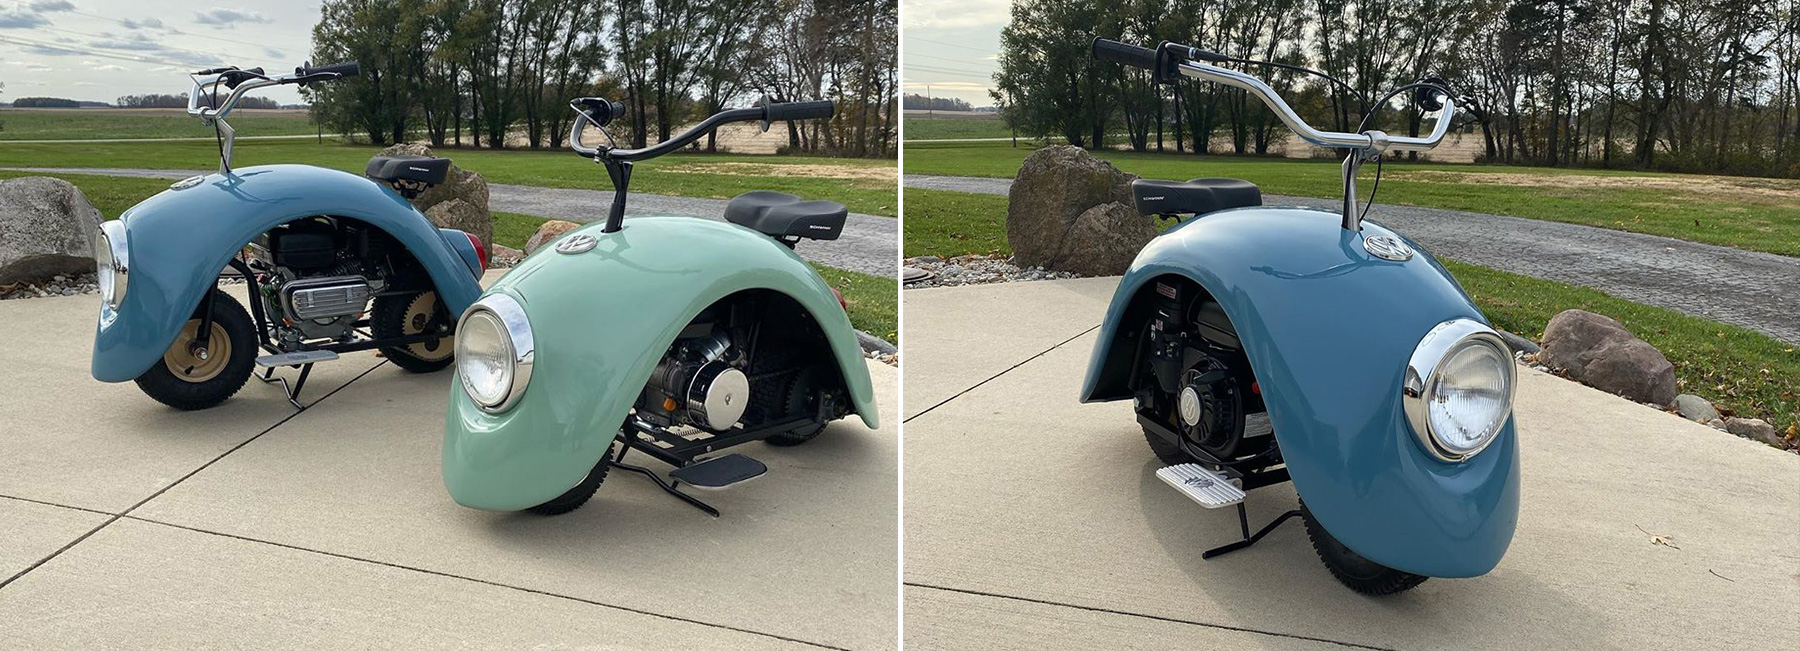 an original volkswagen beetle was taken apart to create these mini bikes